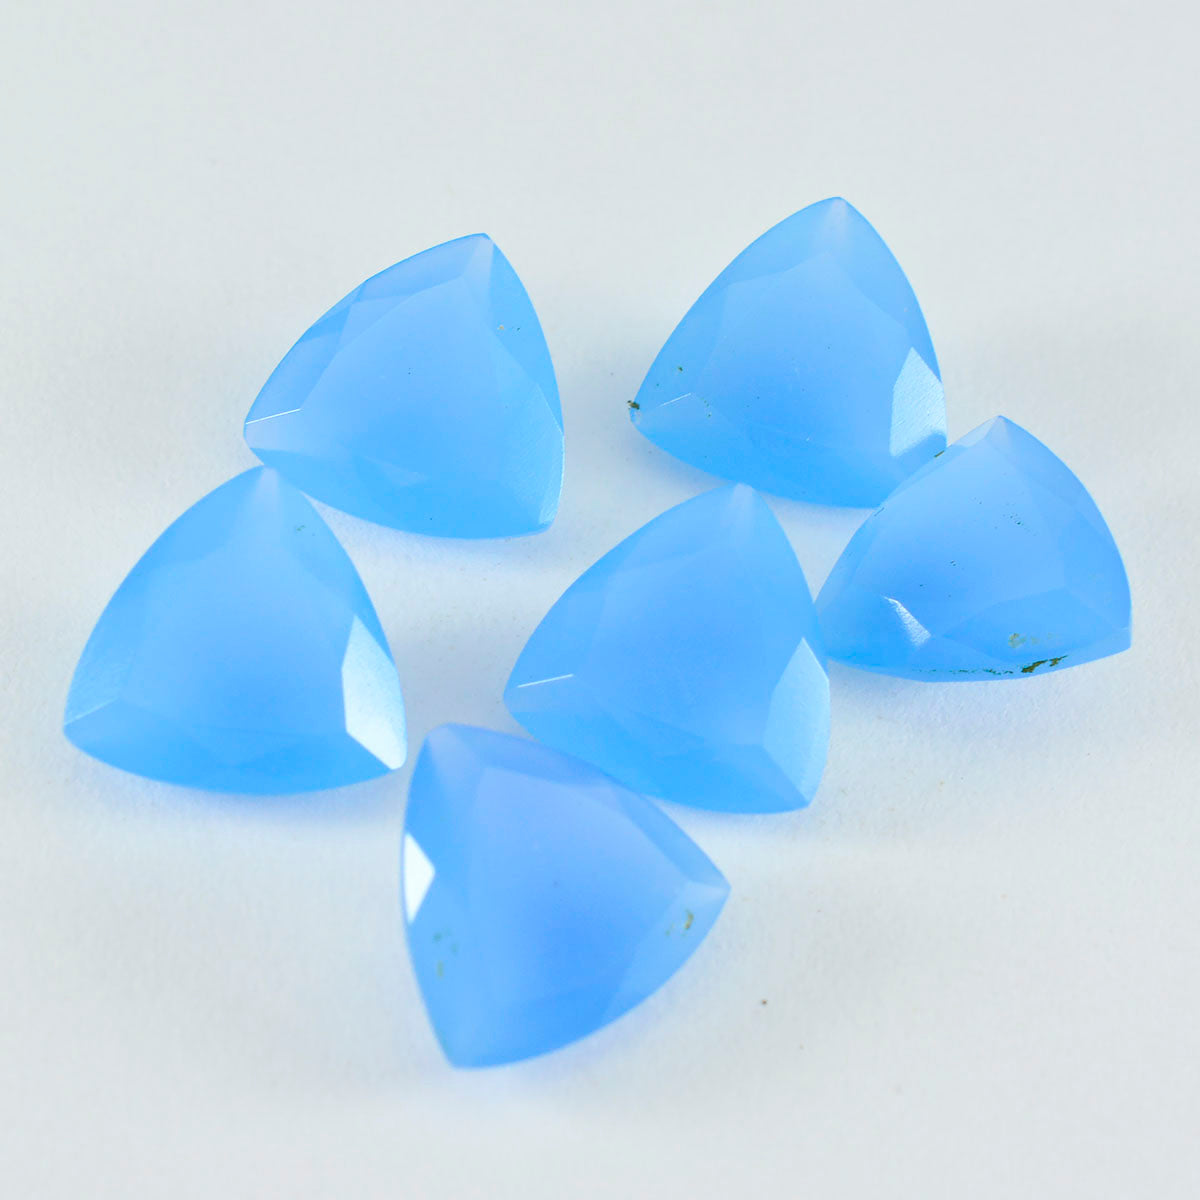 Riyogems 1PC Genuine Blue Chalcedony Faceted 12X12 mm Trillion Shape wonderful Quality Loose Stone